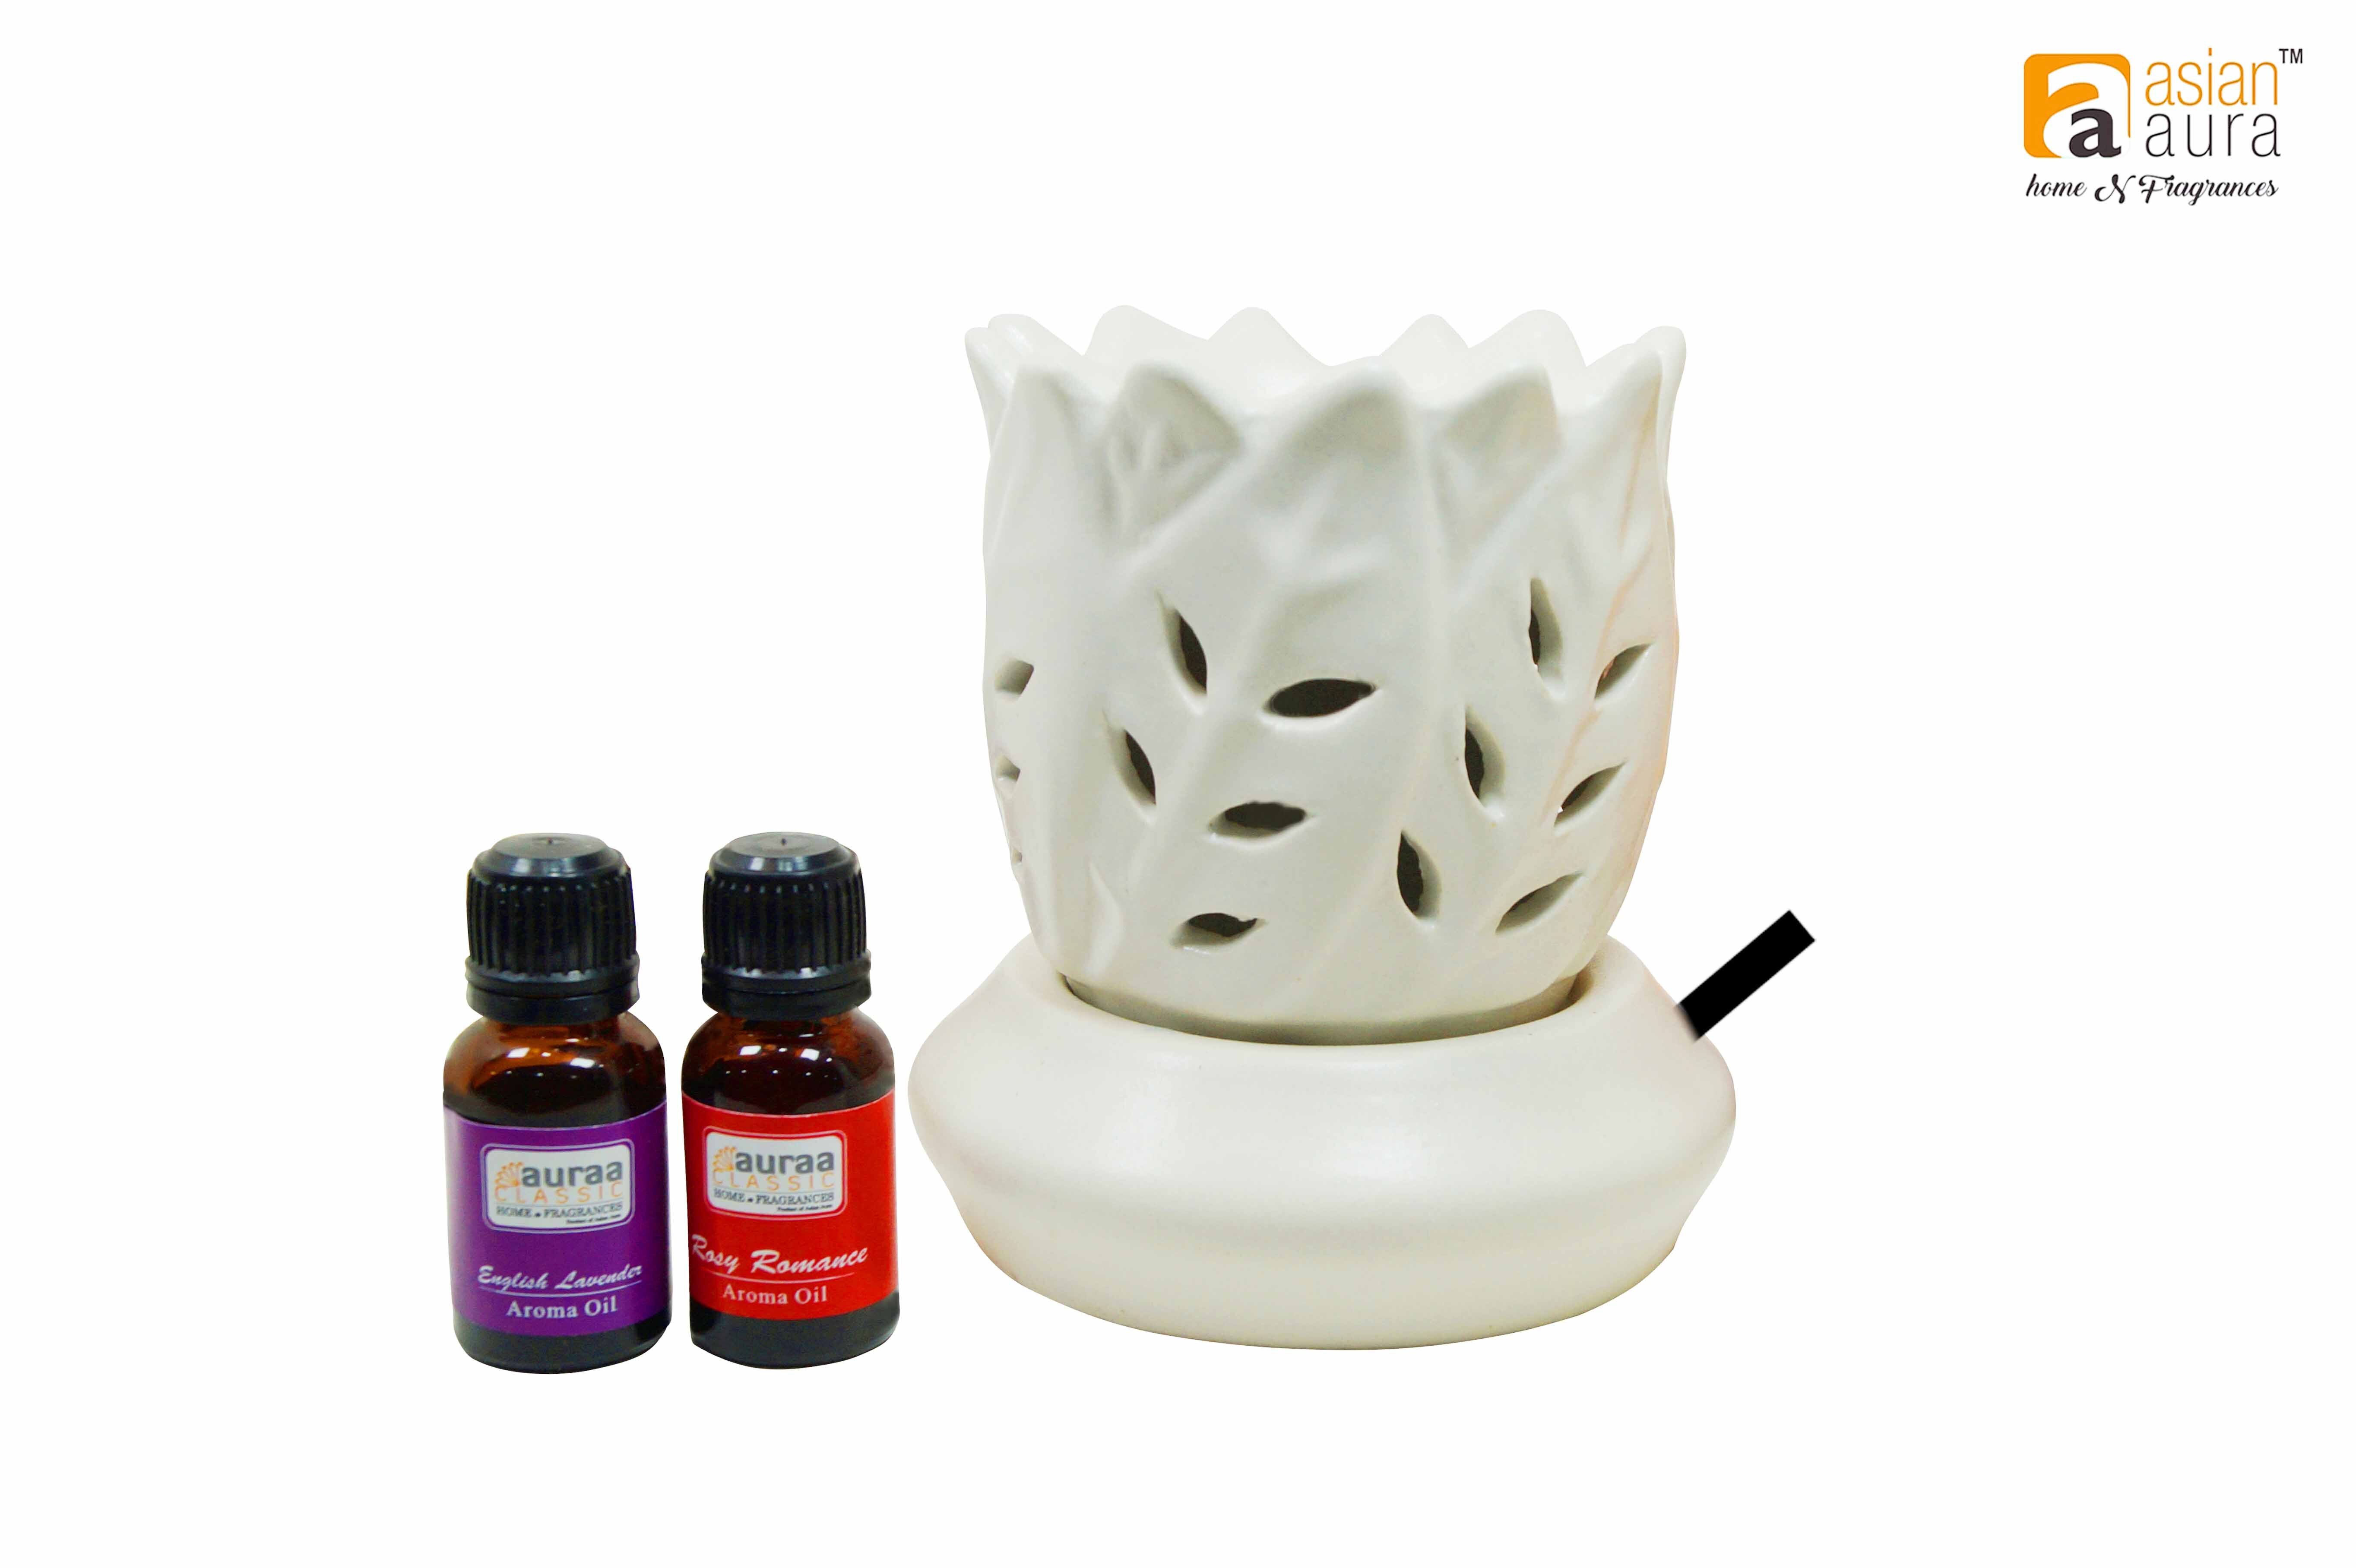 Asian Aura Ceramic Aromatic Oil Diffuser with 2 oil bottles AAEB 0021-W